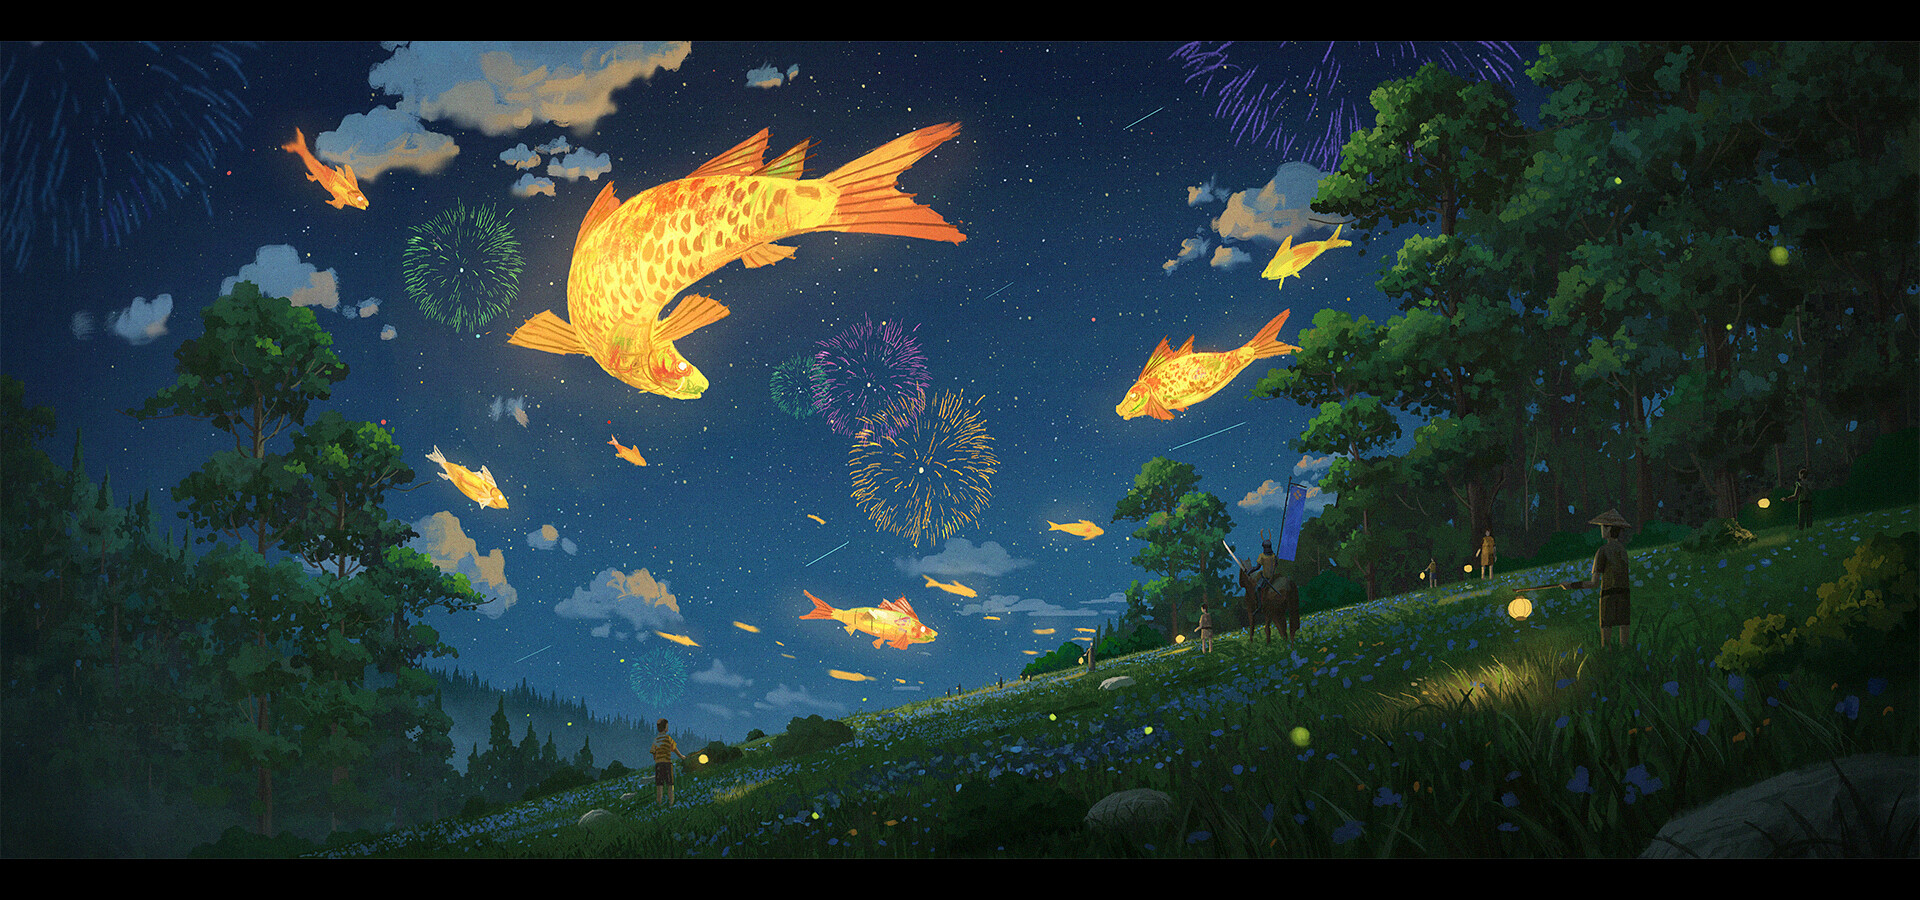 Concept Art Digital Art Environment Night Fish Fireworks Surreal Fantastic Realism Sky Stars Trees A 1920x900